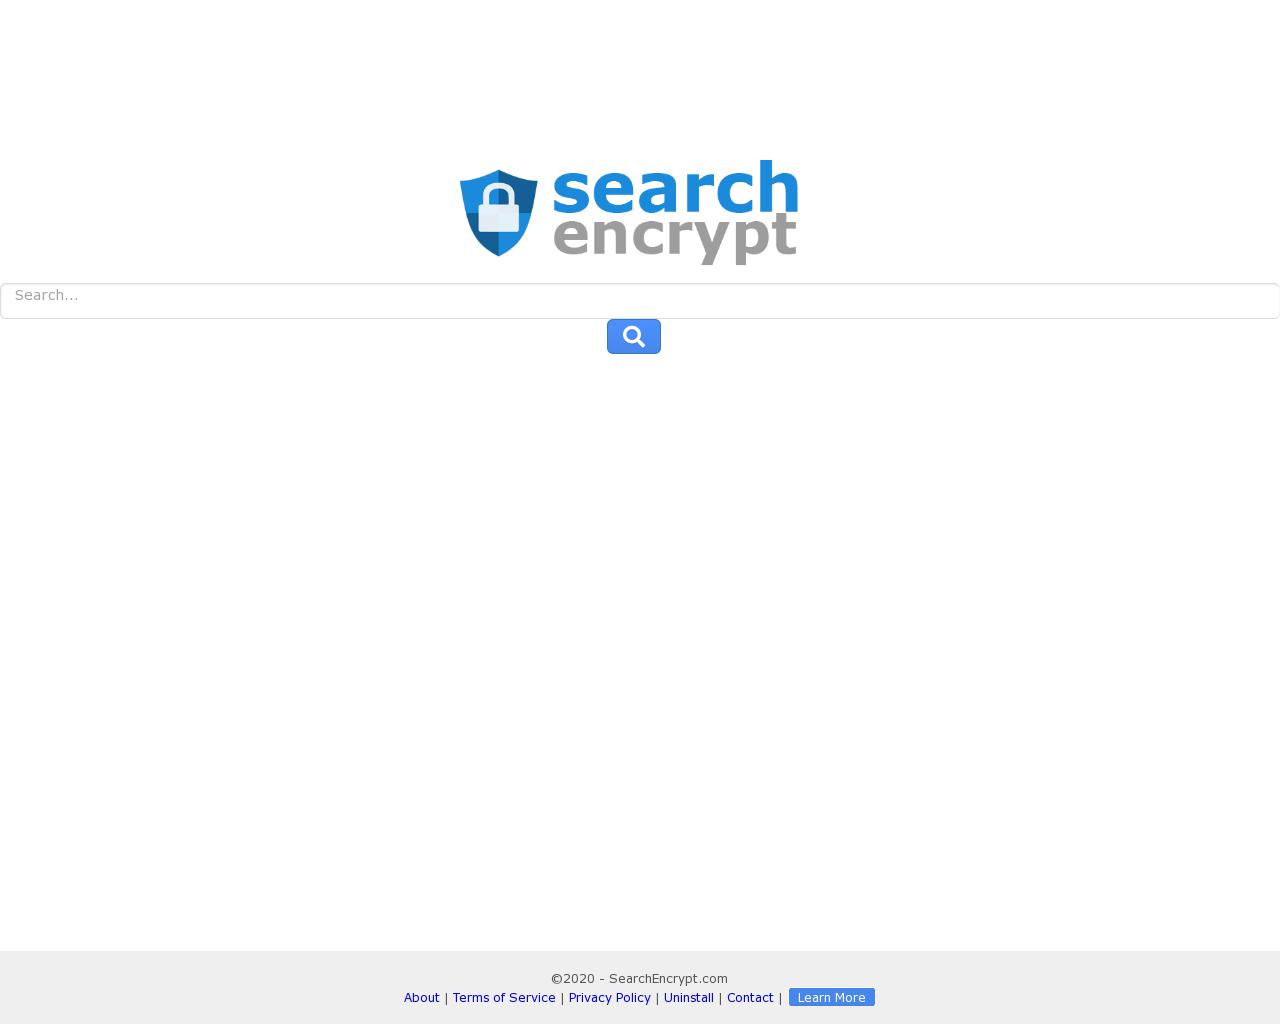 searchencrypt.com